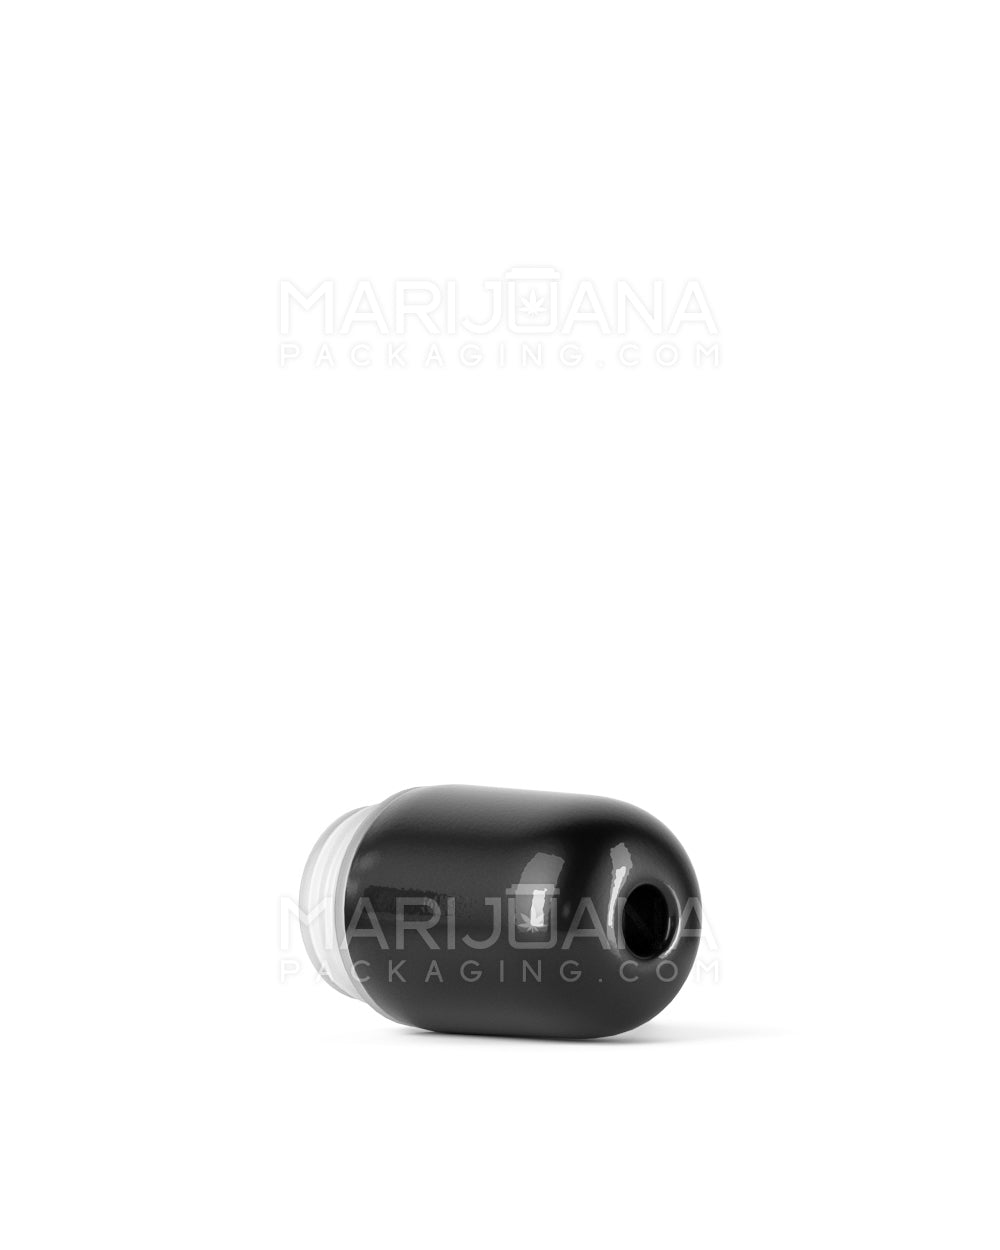 AVD | Round Vape Mouthpiece for Glass Cartridges | Black Ceramic - Eazy Press - 600 Count - 5